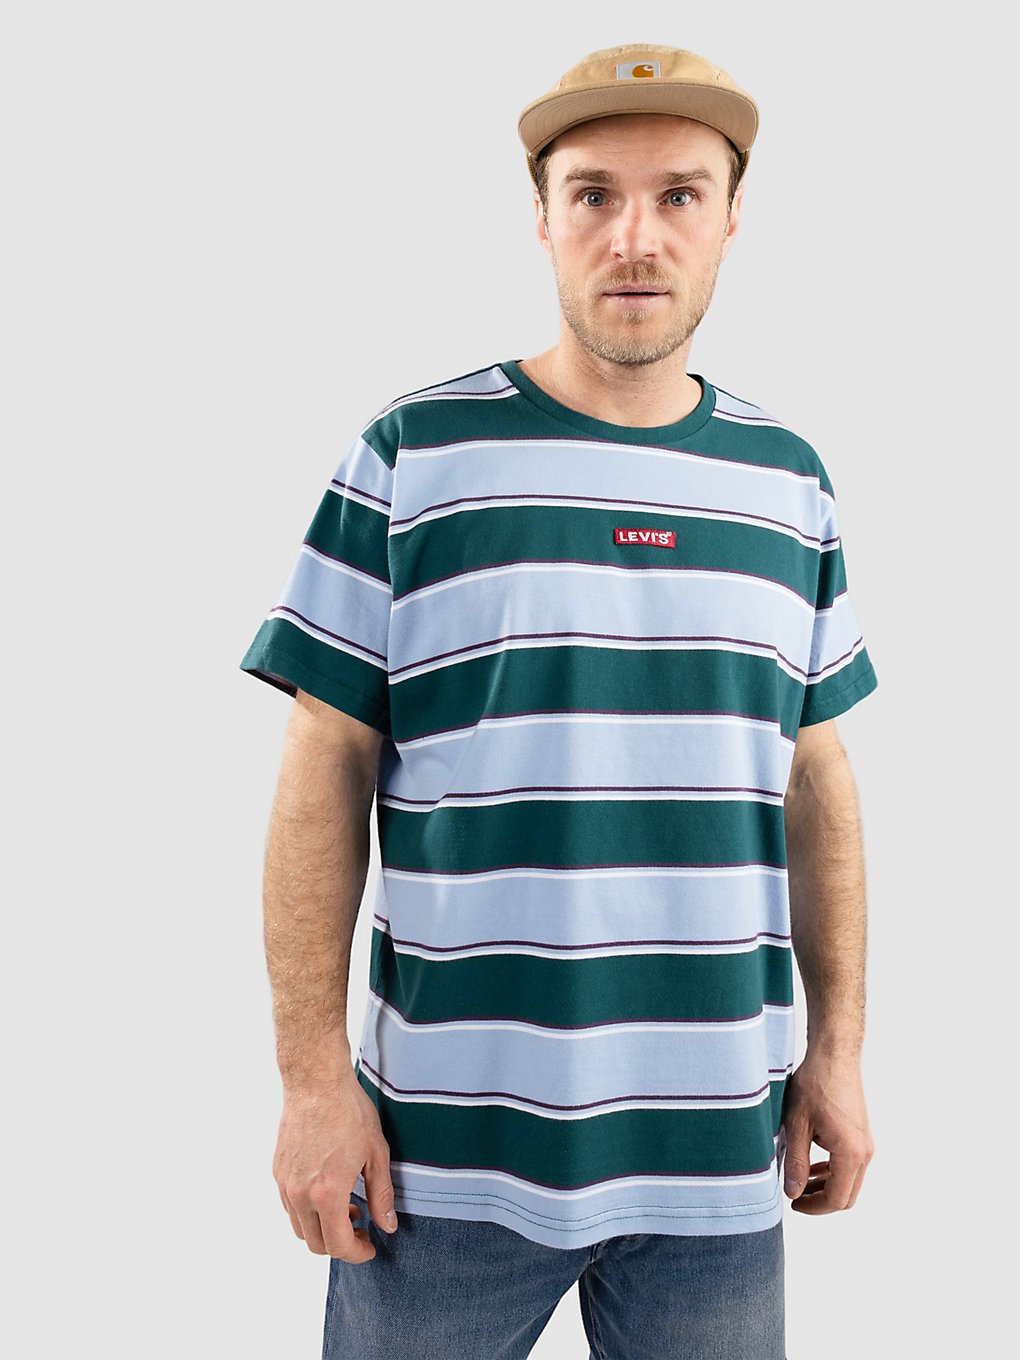 Levi's Relaxed Baby Tab T-Shirt gilia atlantic deep kaufen